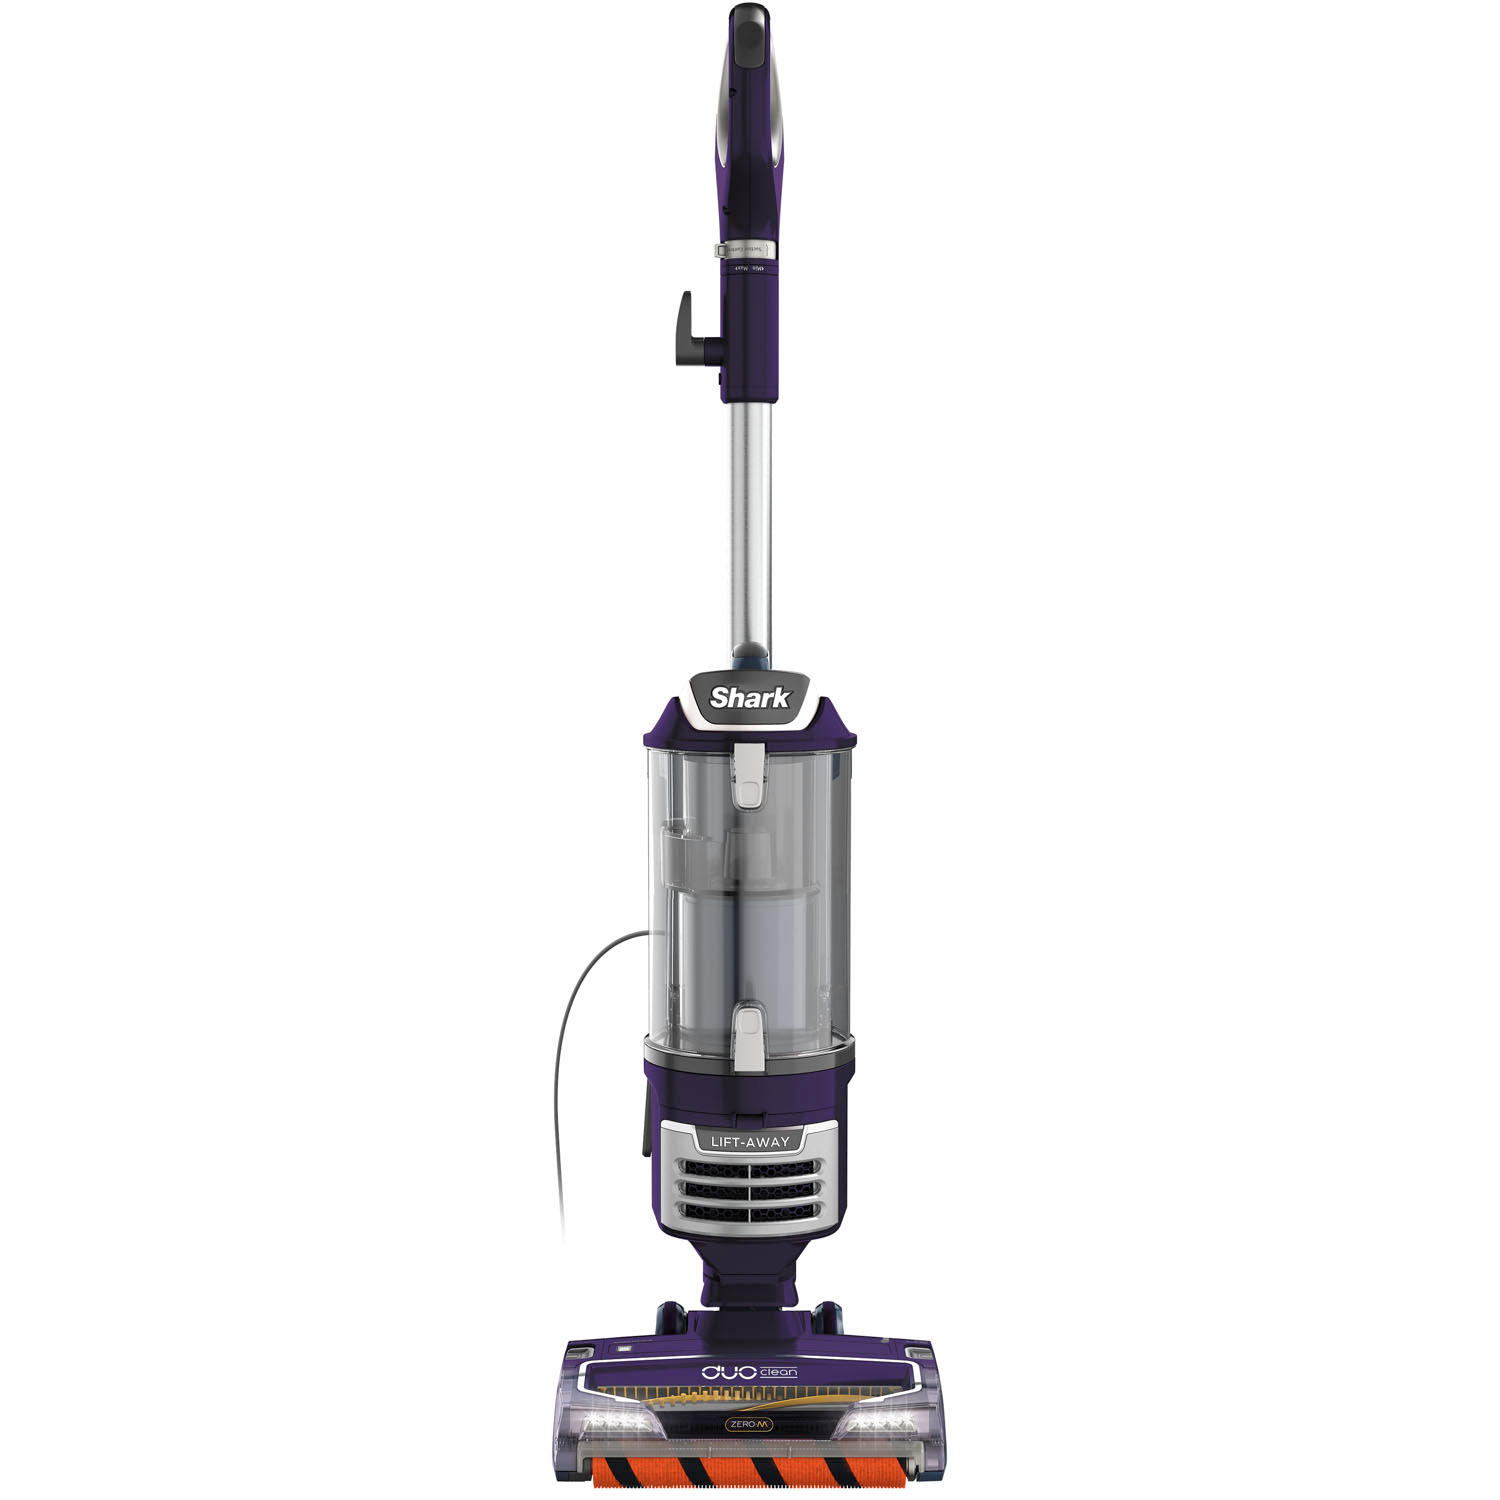 Shark Rotator Lift-Away DuoClean Pro Upright Vacuum with Self-Cleaning Brushroll